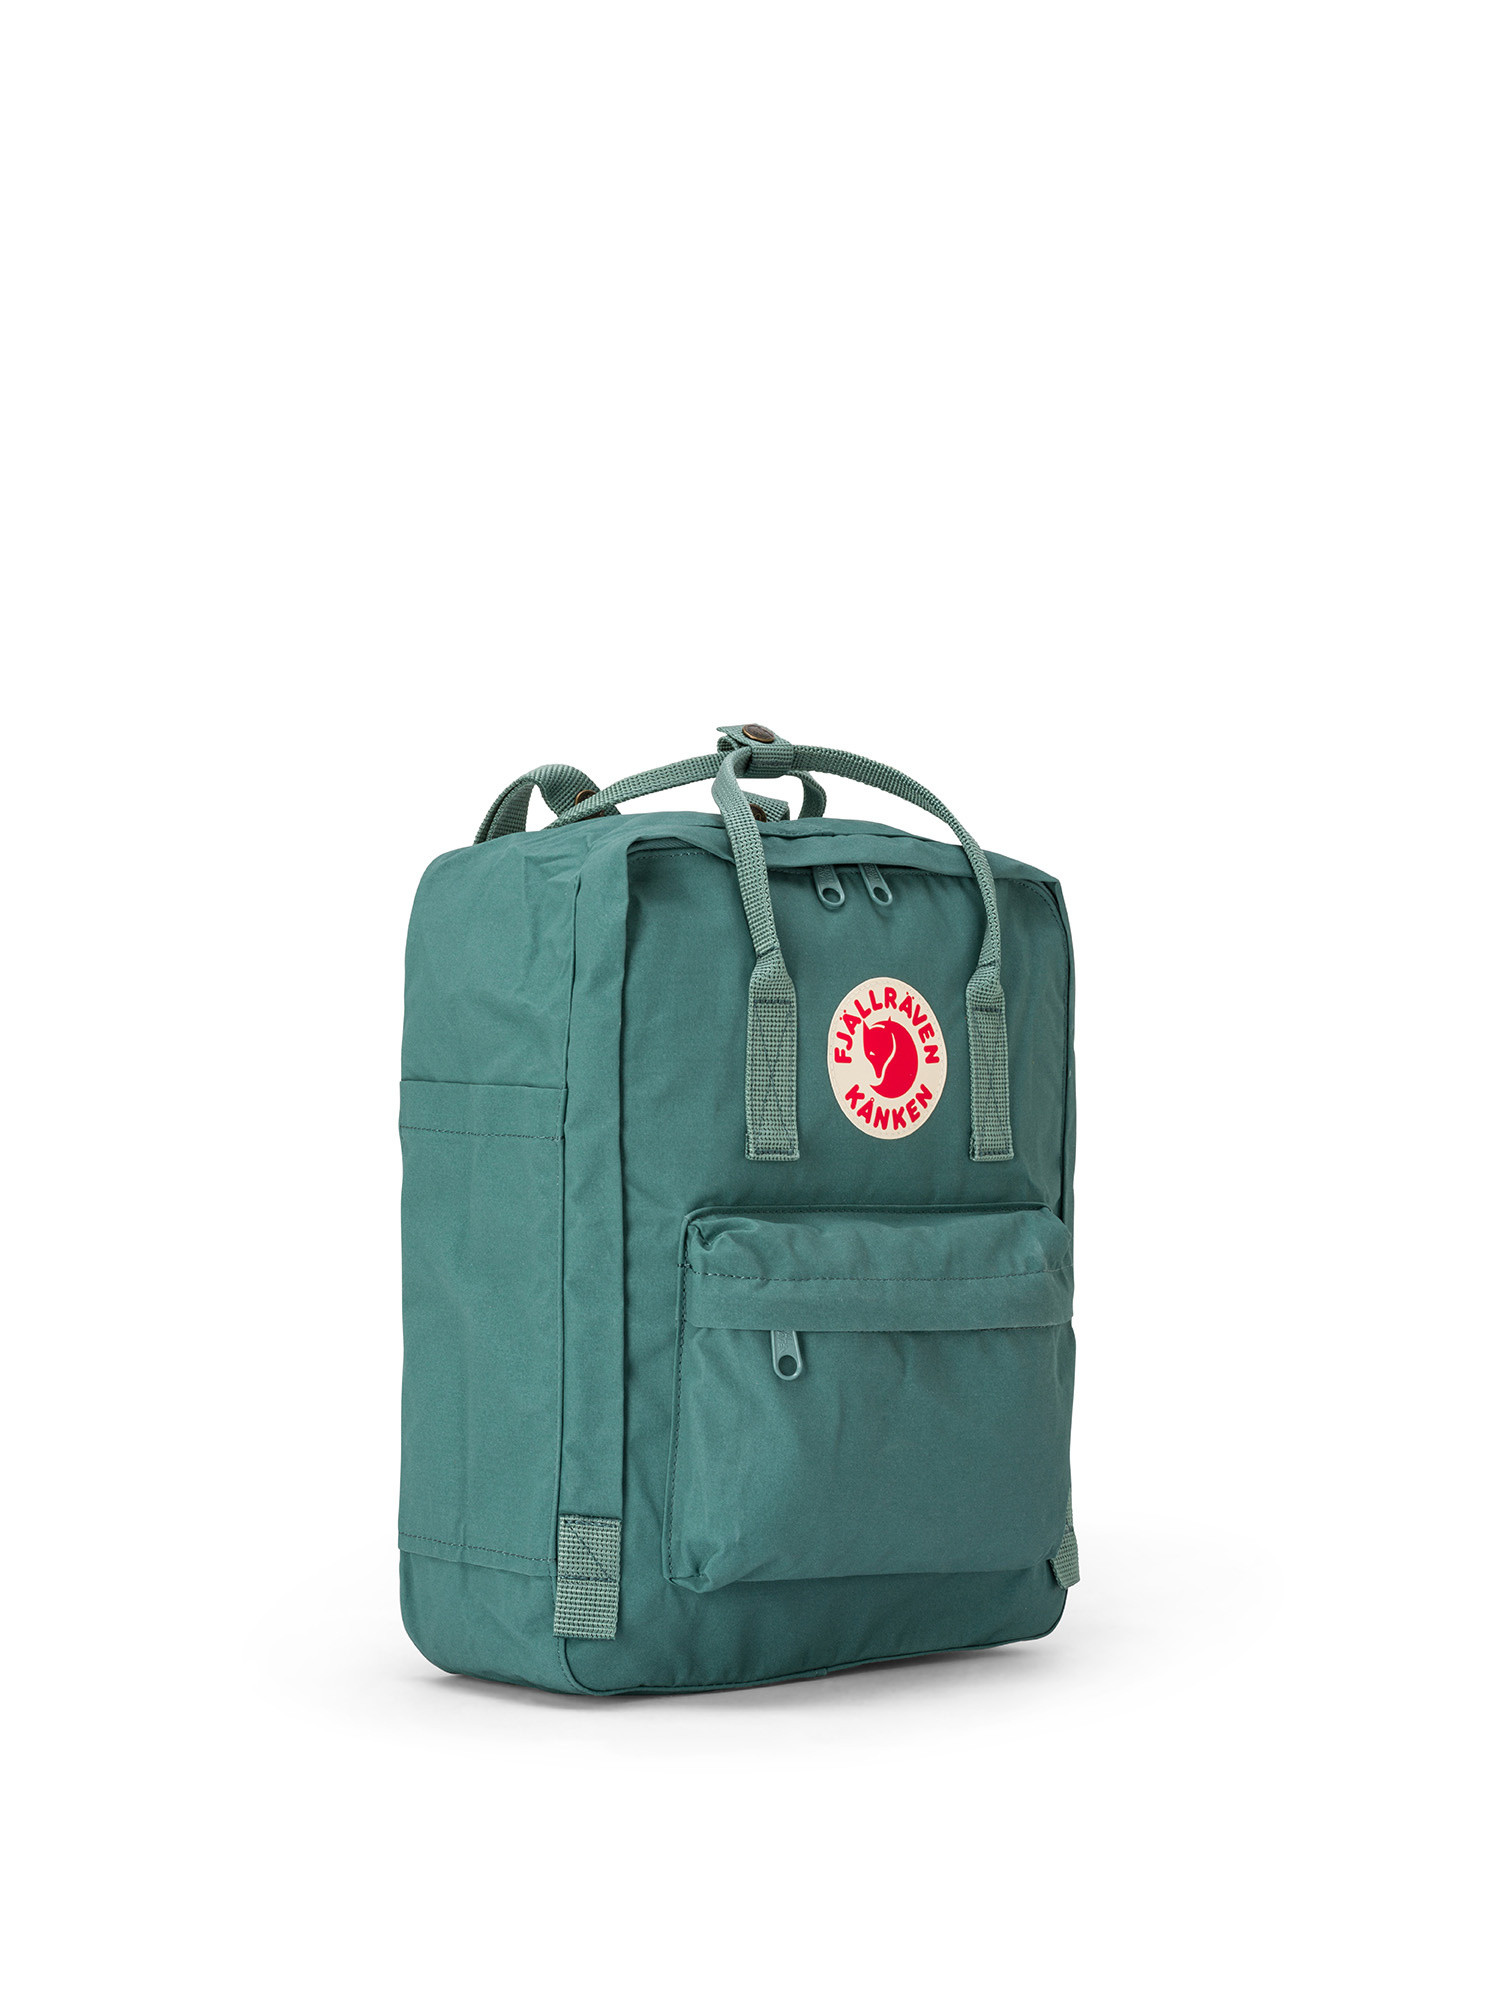 Fjallraven - Classic Kånken backpack in durable Vinylon fabric, Teal, large image number 1